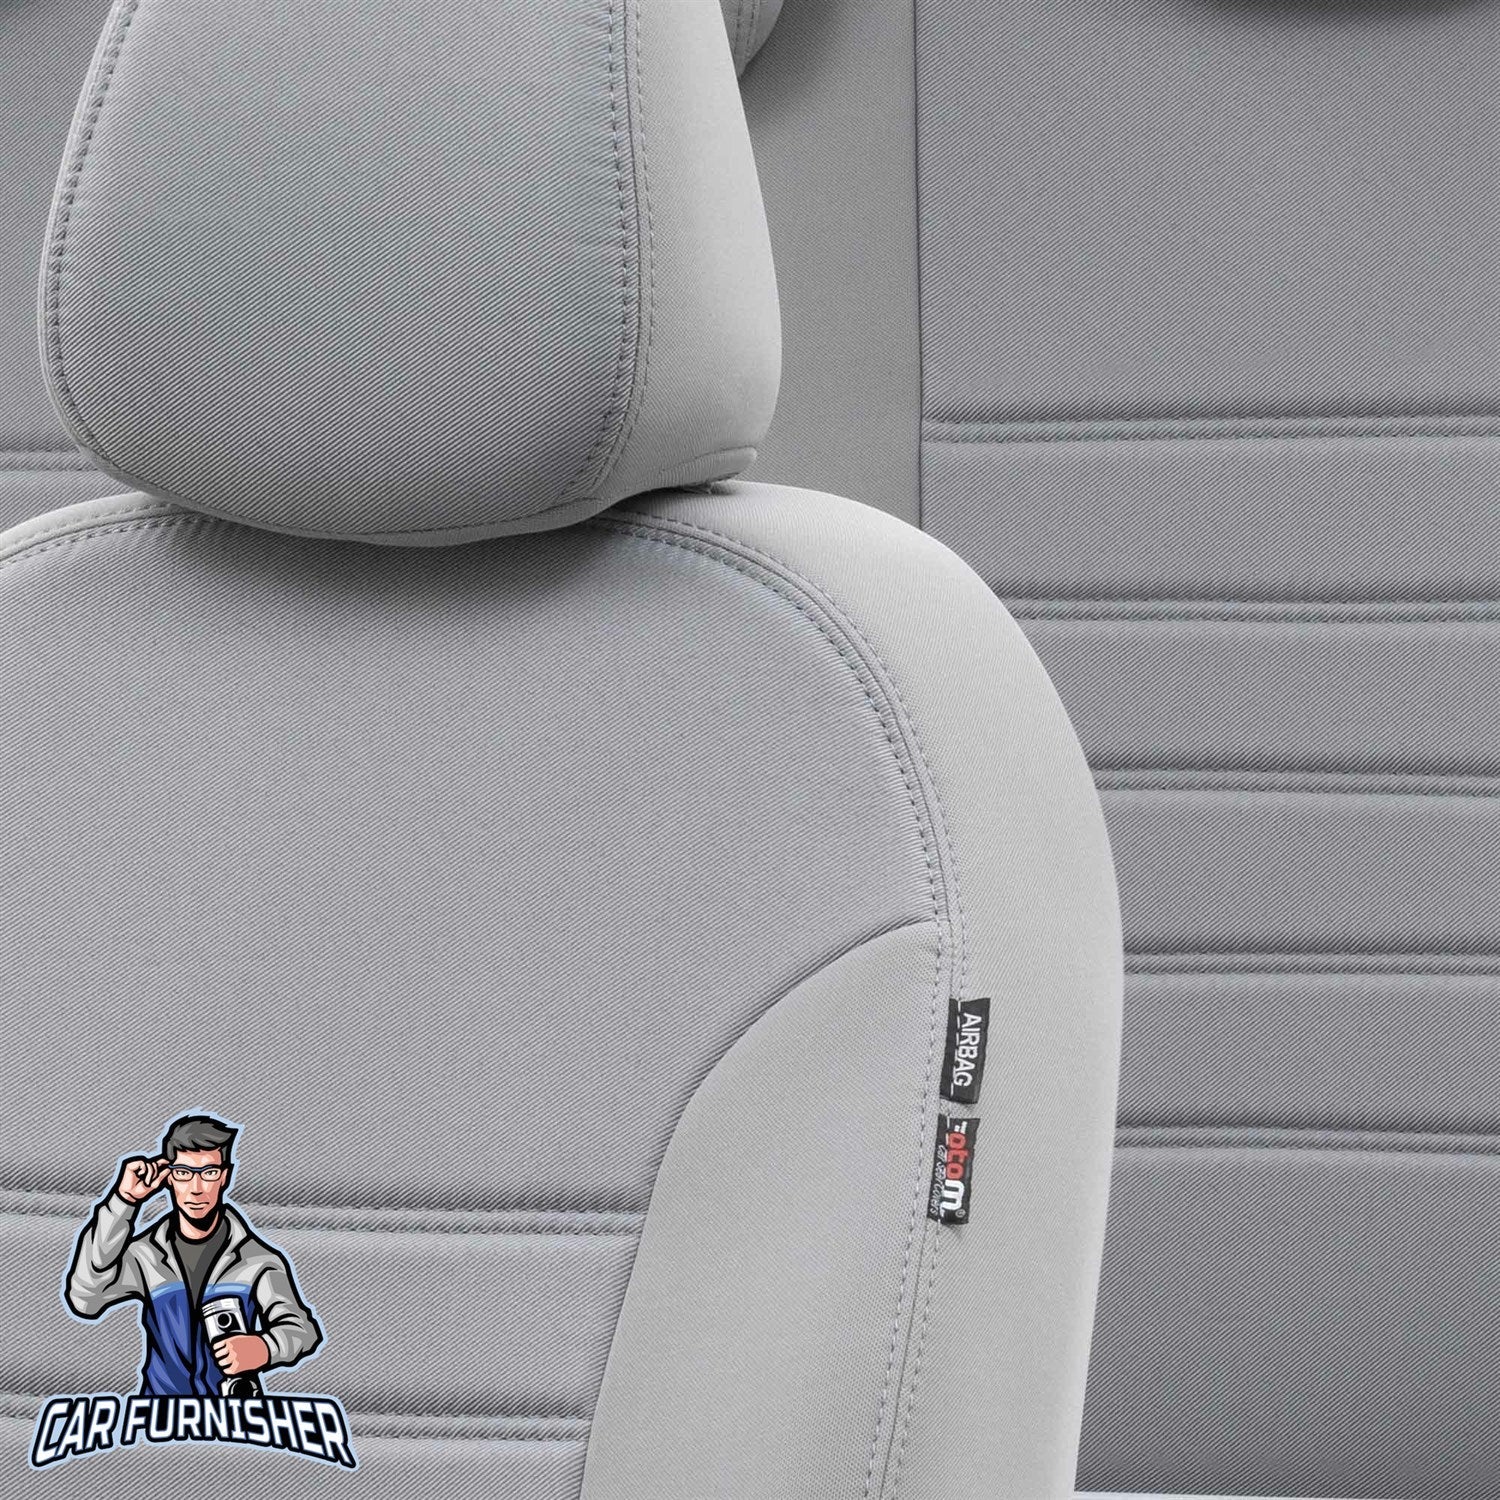 Toyota Yaris Seat Cover Original Jacquard Design Light Gray Jacquard Fabric